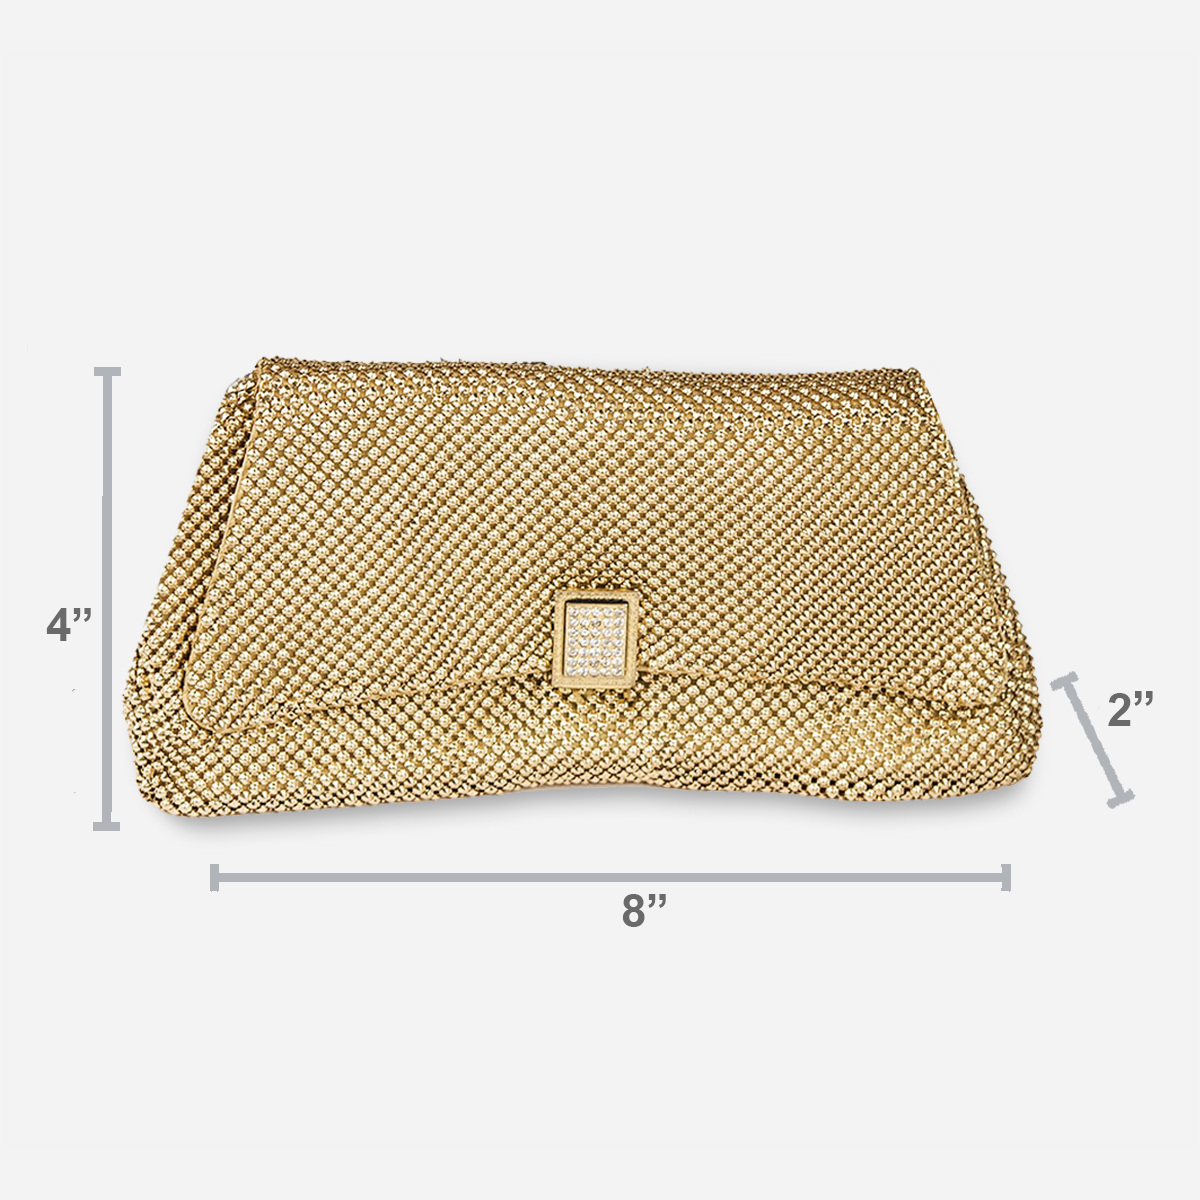 Gold cocktail bag size